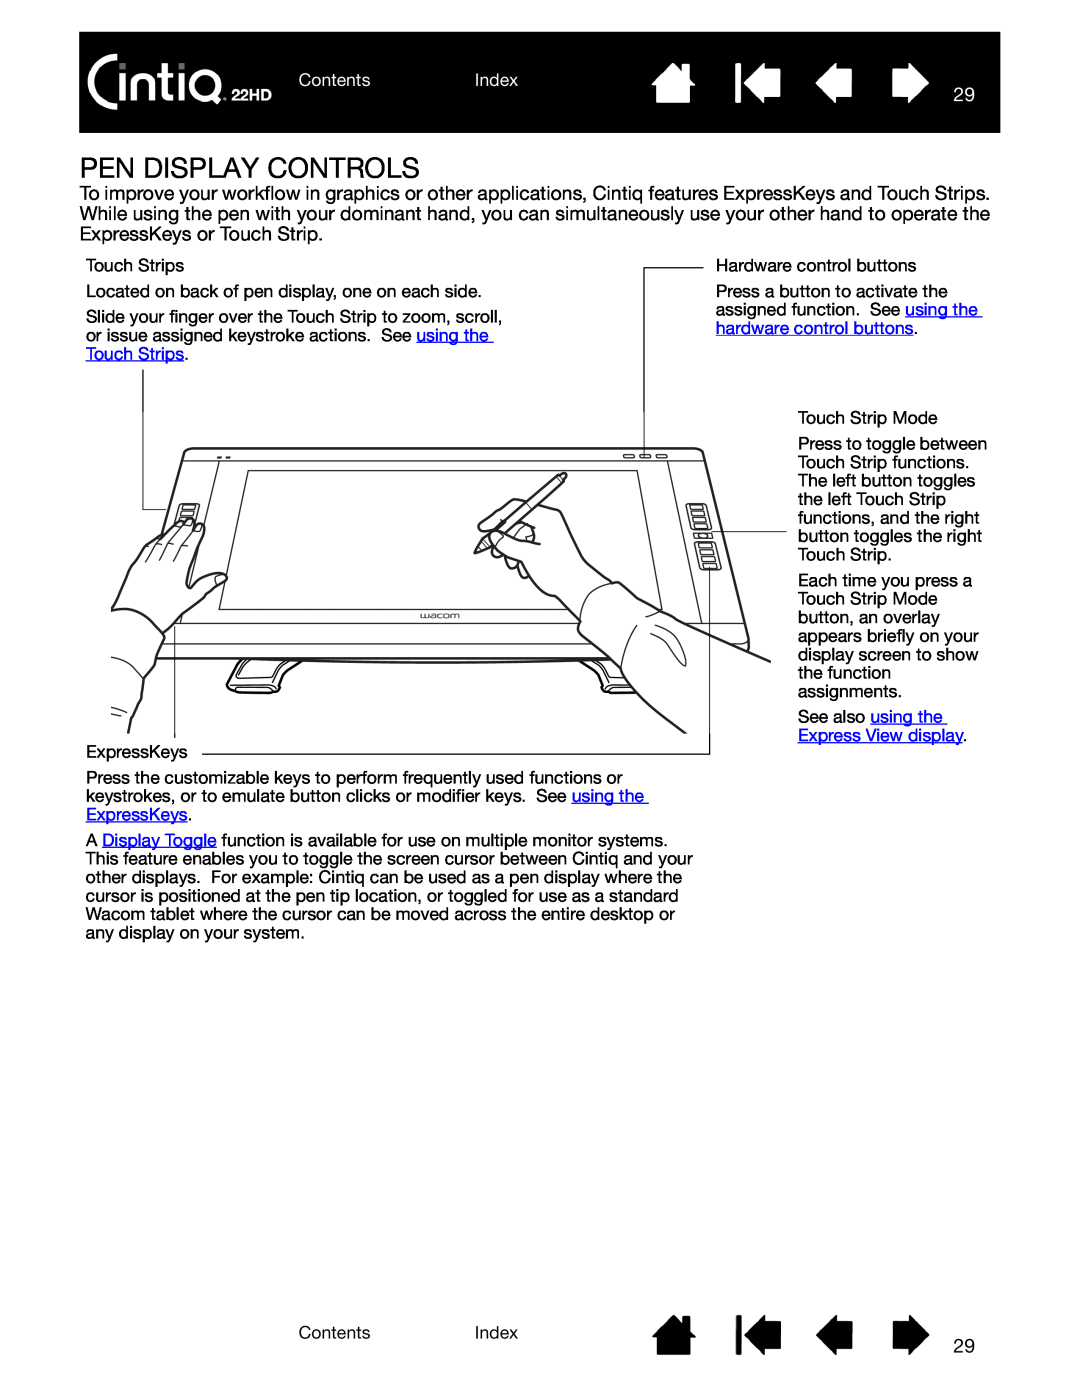 Wacom DTK-2200 user manual Pen Display Controls, ContentsIndex, See also using the Express View display 